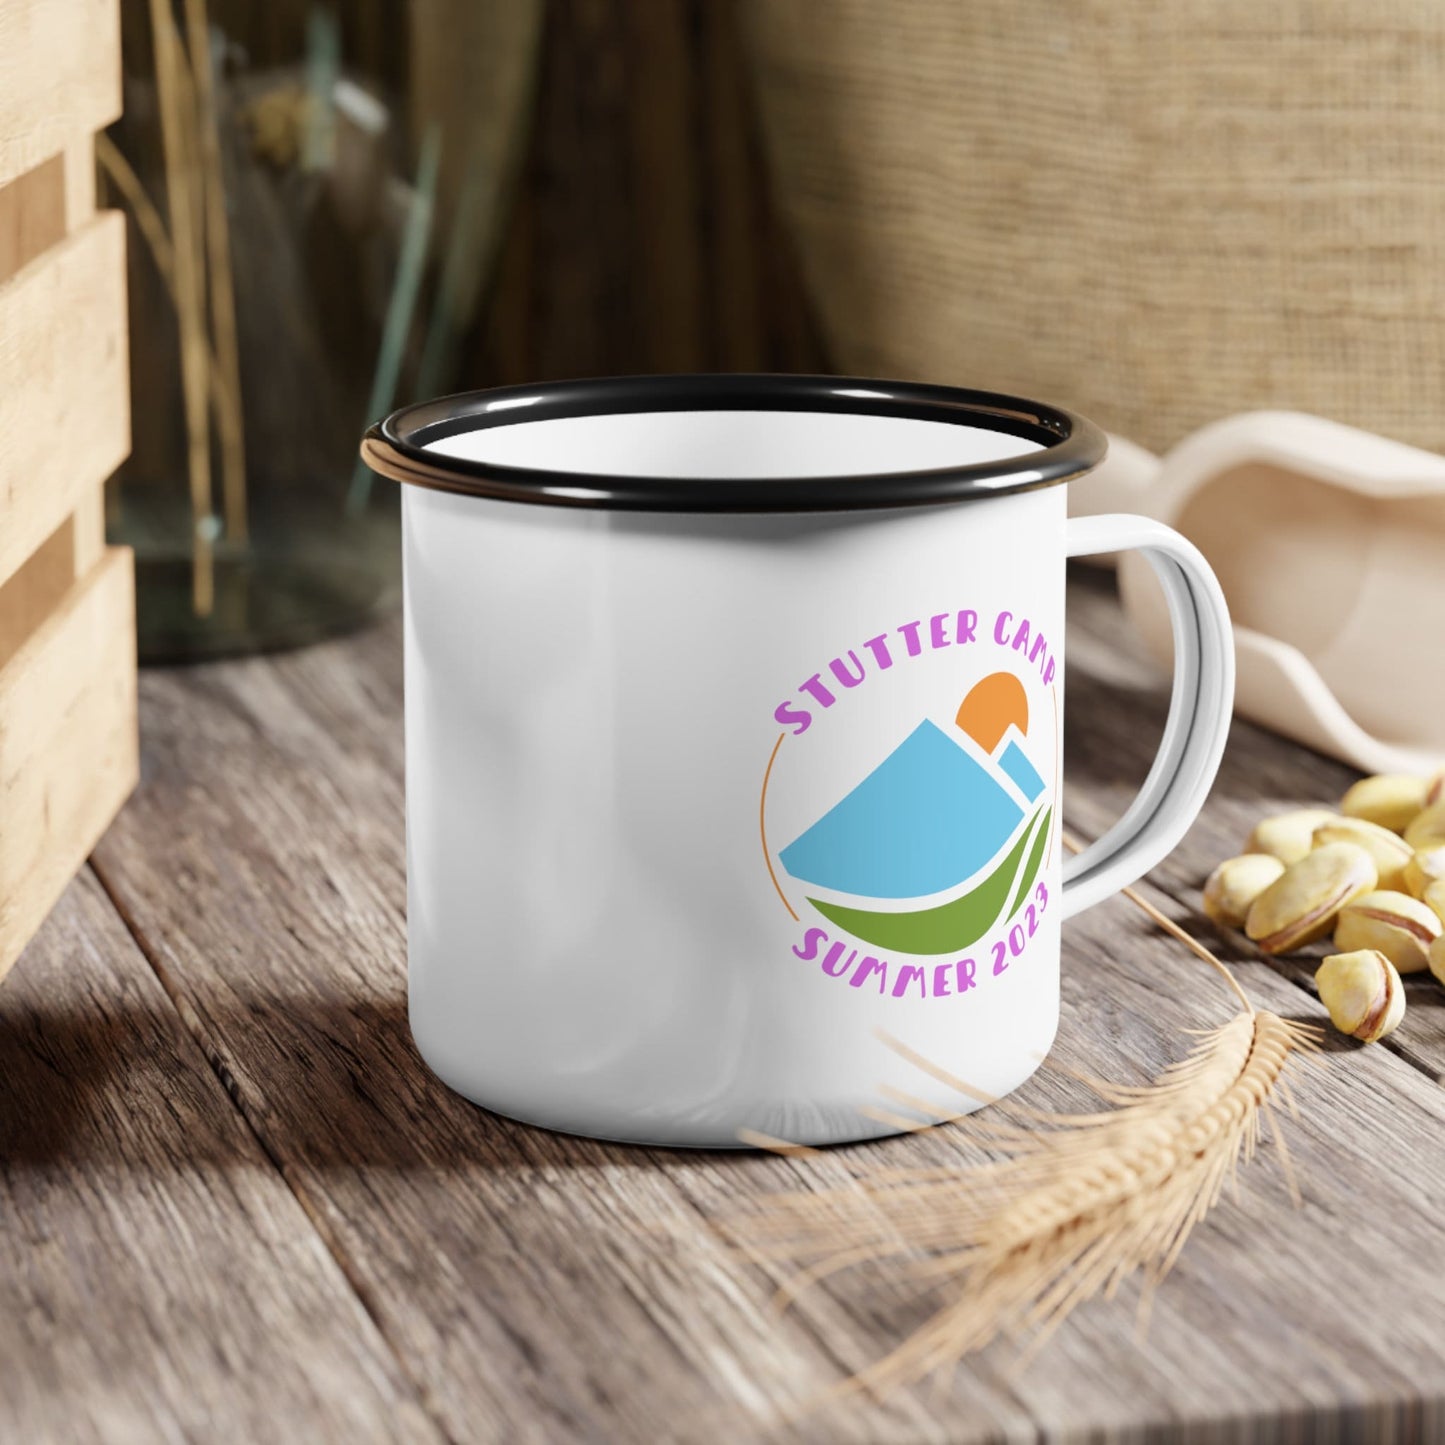 Stutter Camp Summer 2023 Enamel Coffee Mug